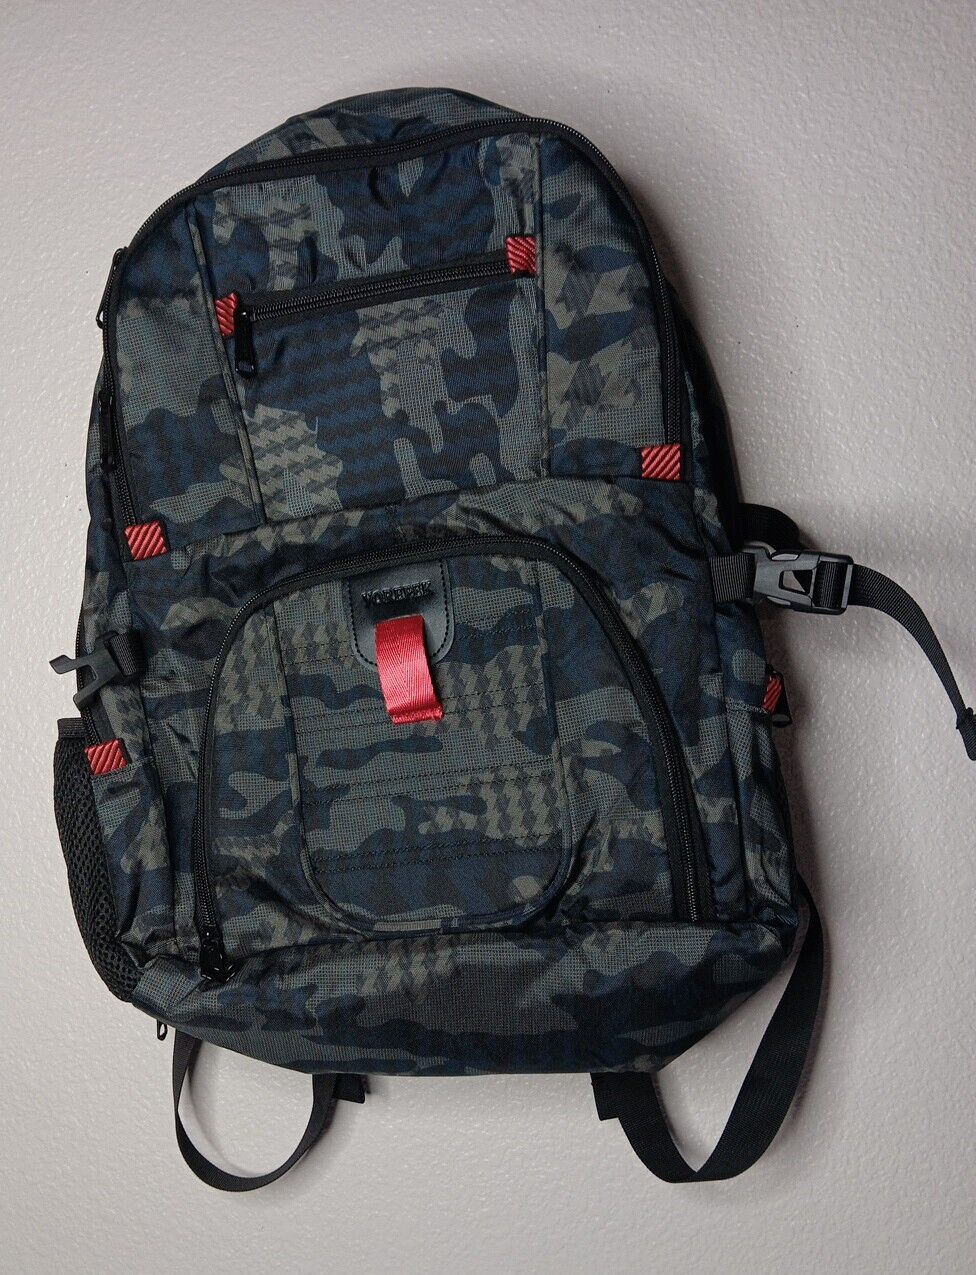 YOREPEK Travel Backpack Extra Large 50L Laptop Backpacks for Men Women